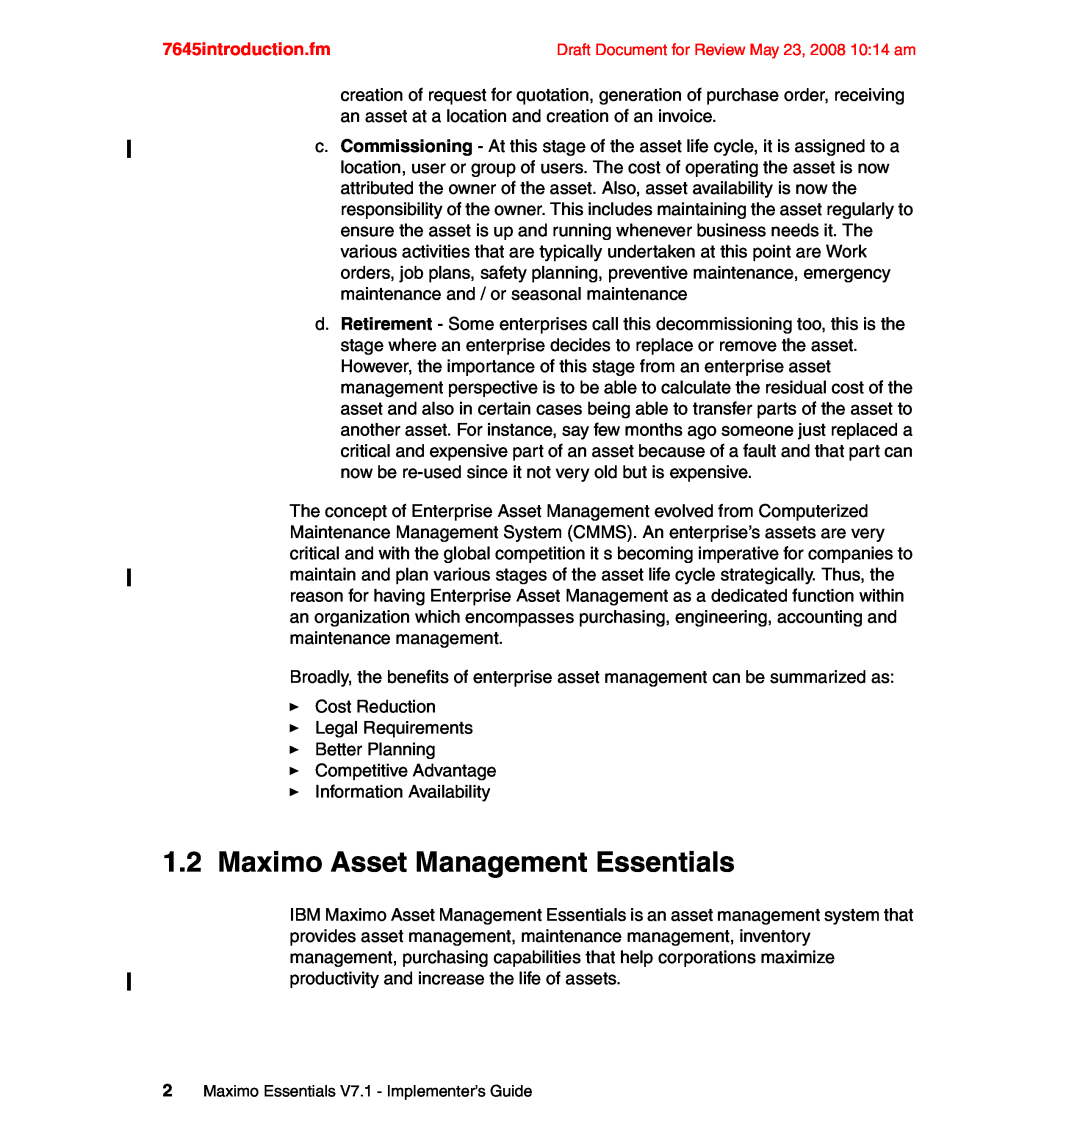 IBM SG24-7645-00 manual 1.2Maximo Asset Management Essentials, 7645introduction.fm 